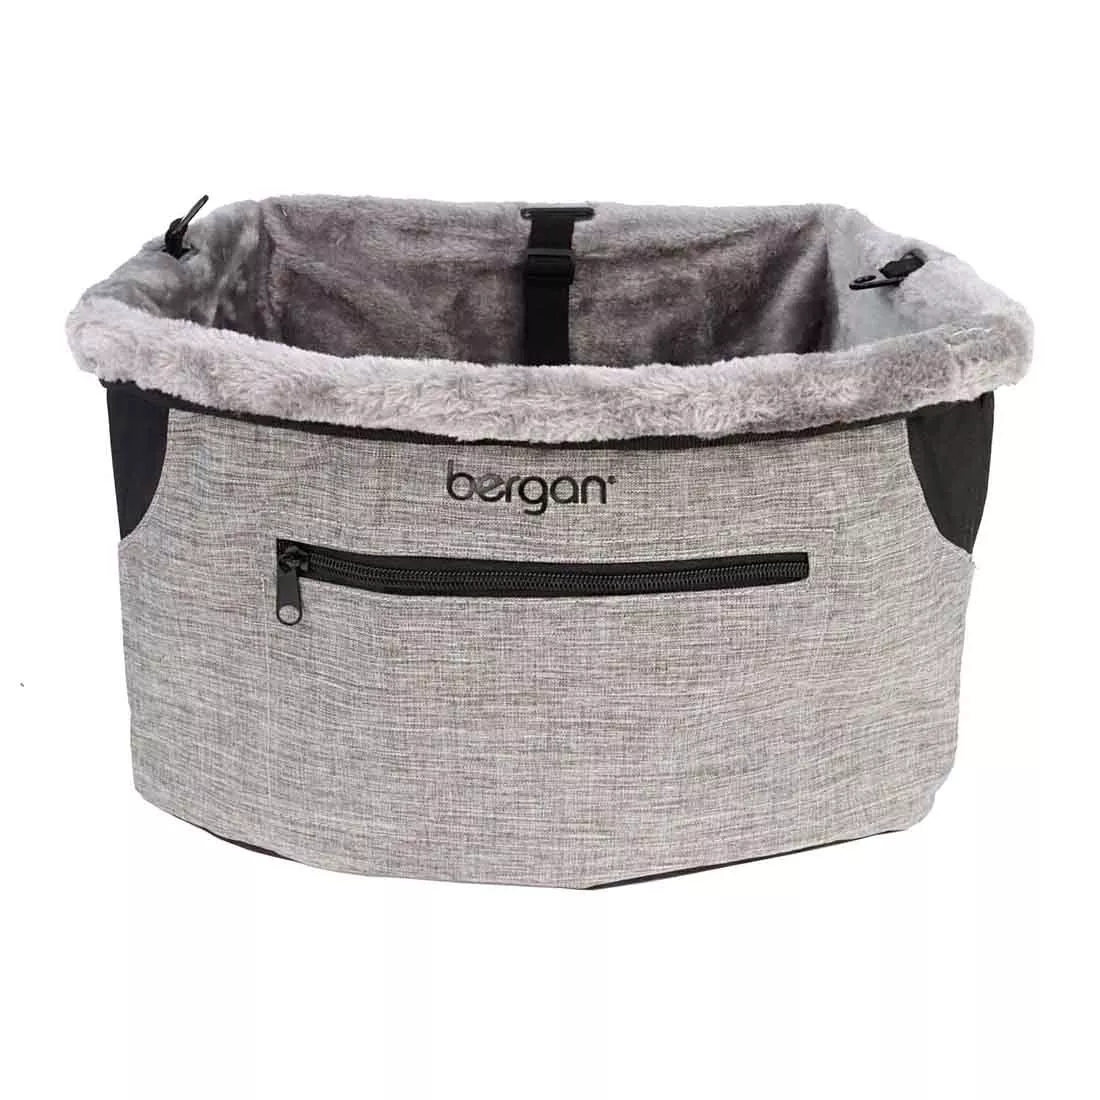 Bergan® Comfort Hanging Dog Booster